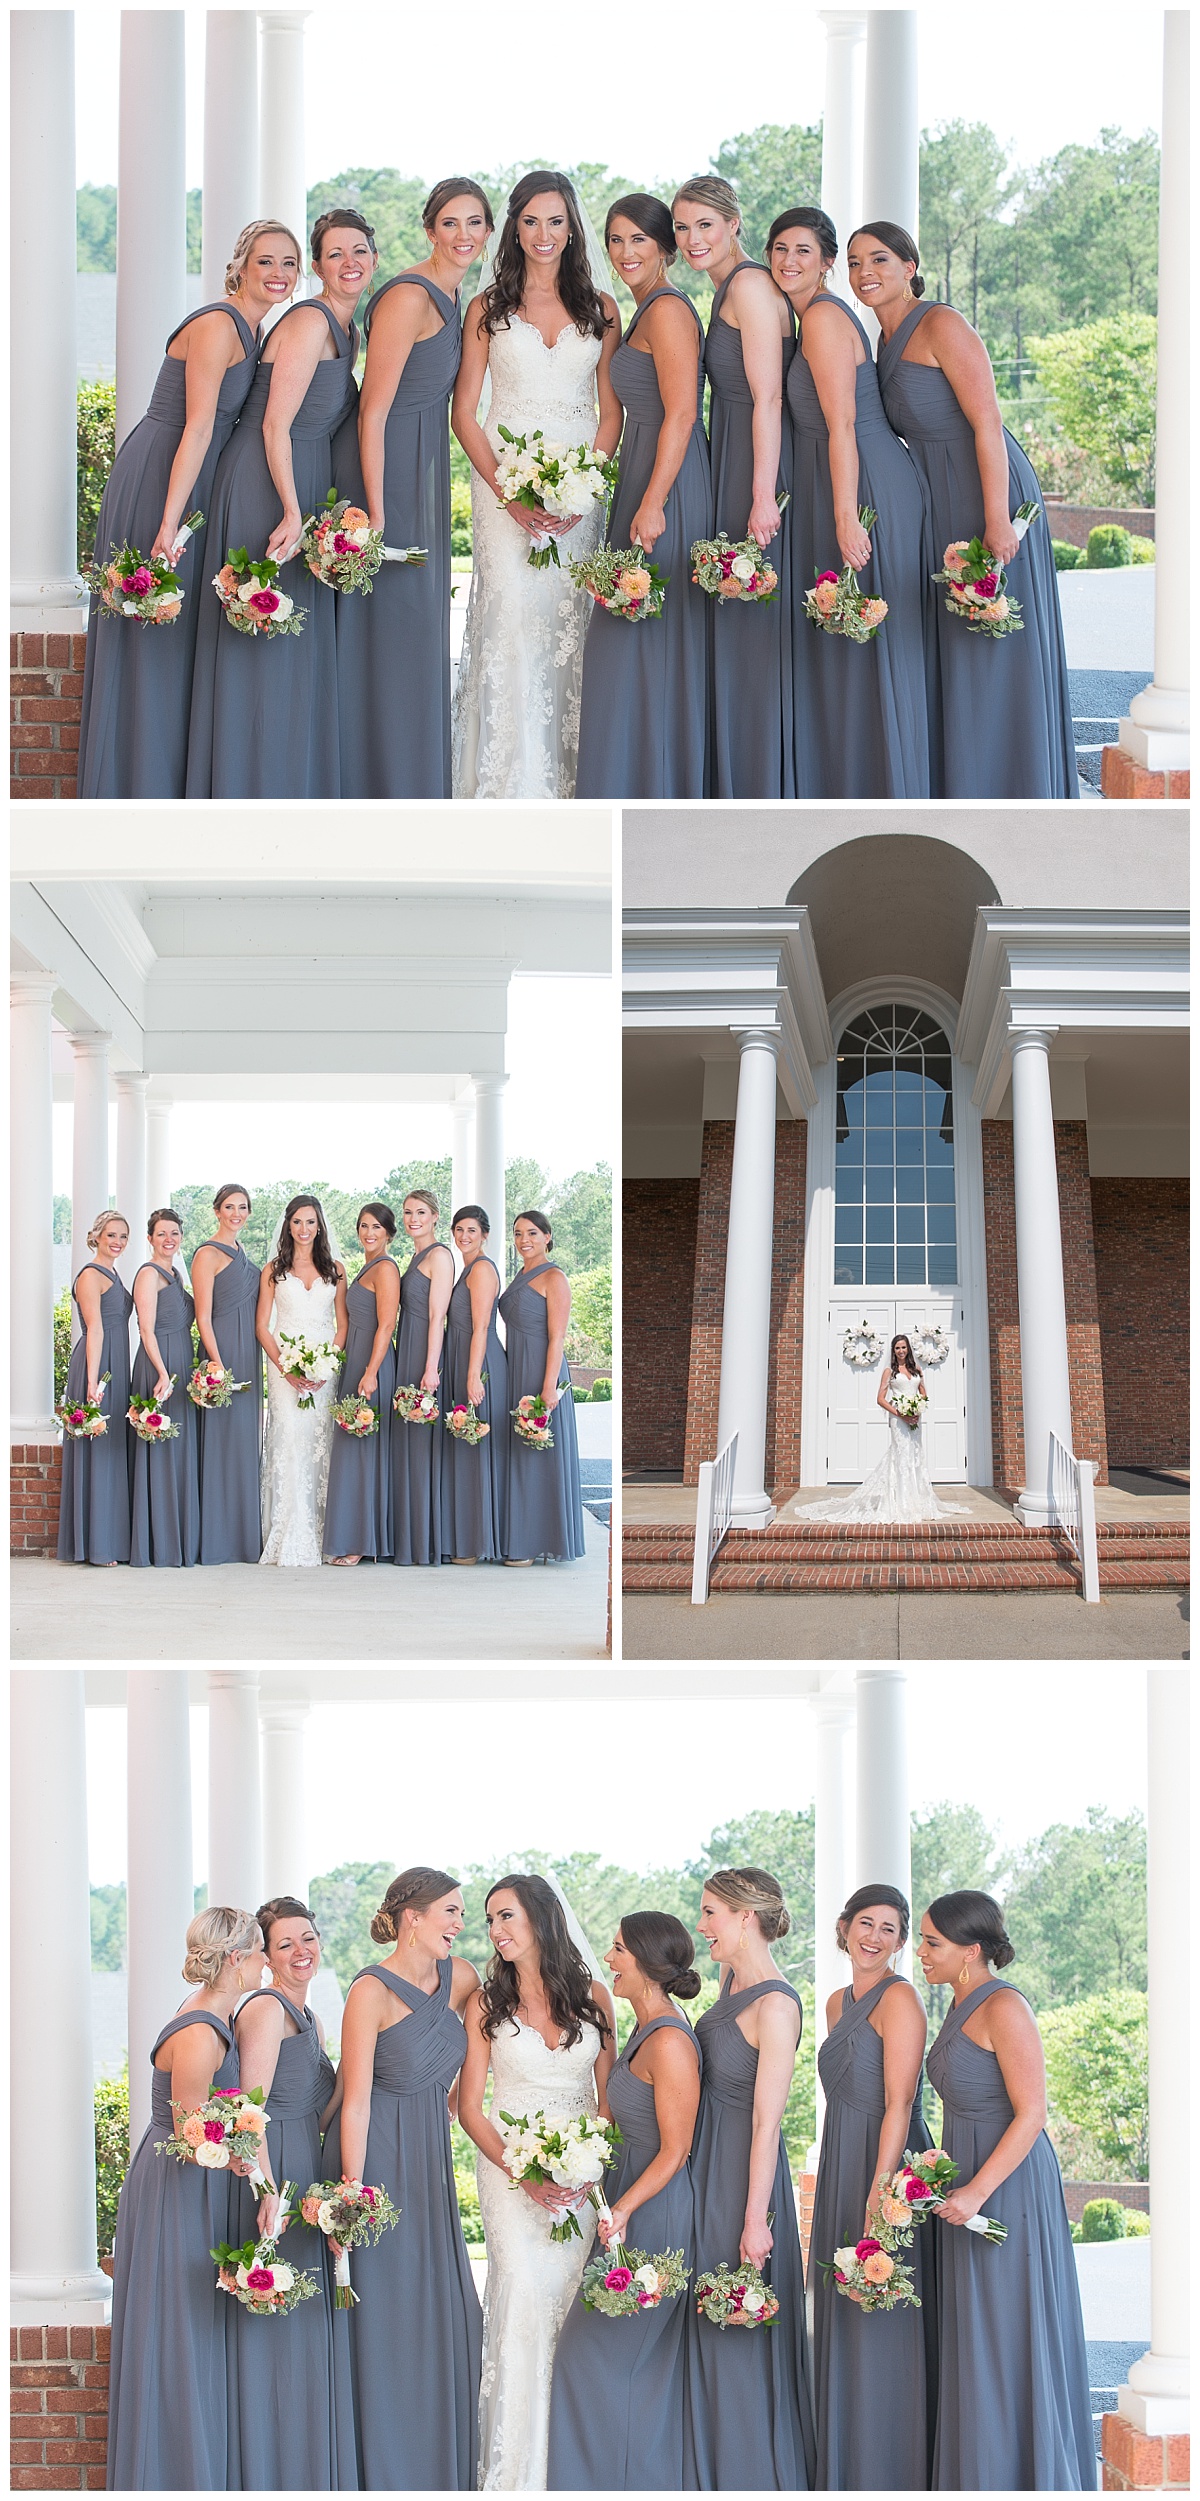 Bridesmaid photos in slate grey dresses